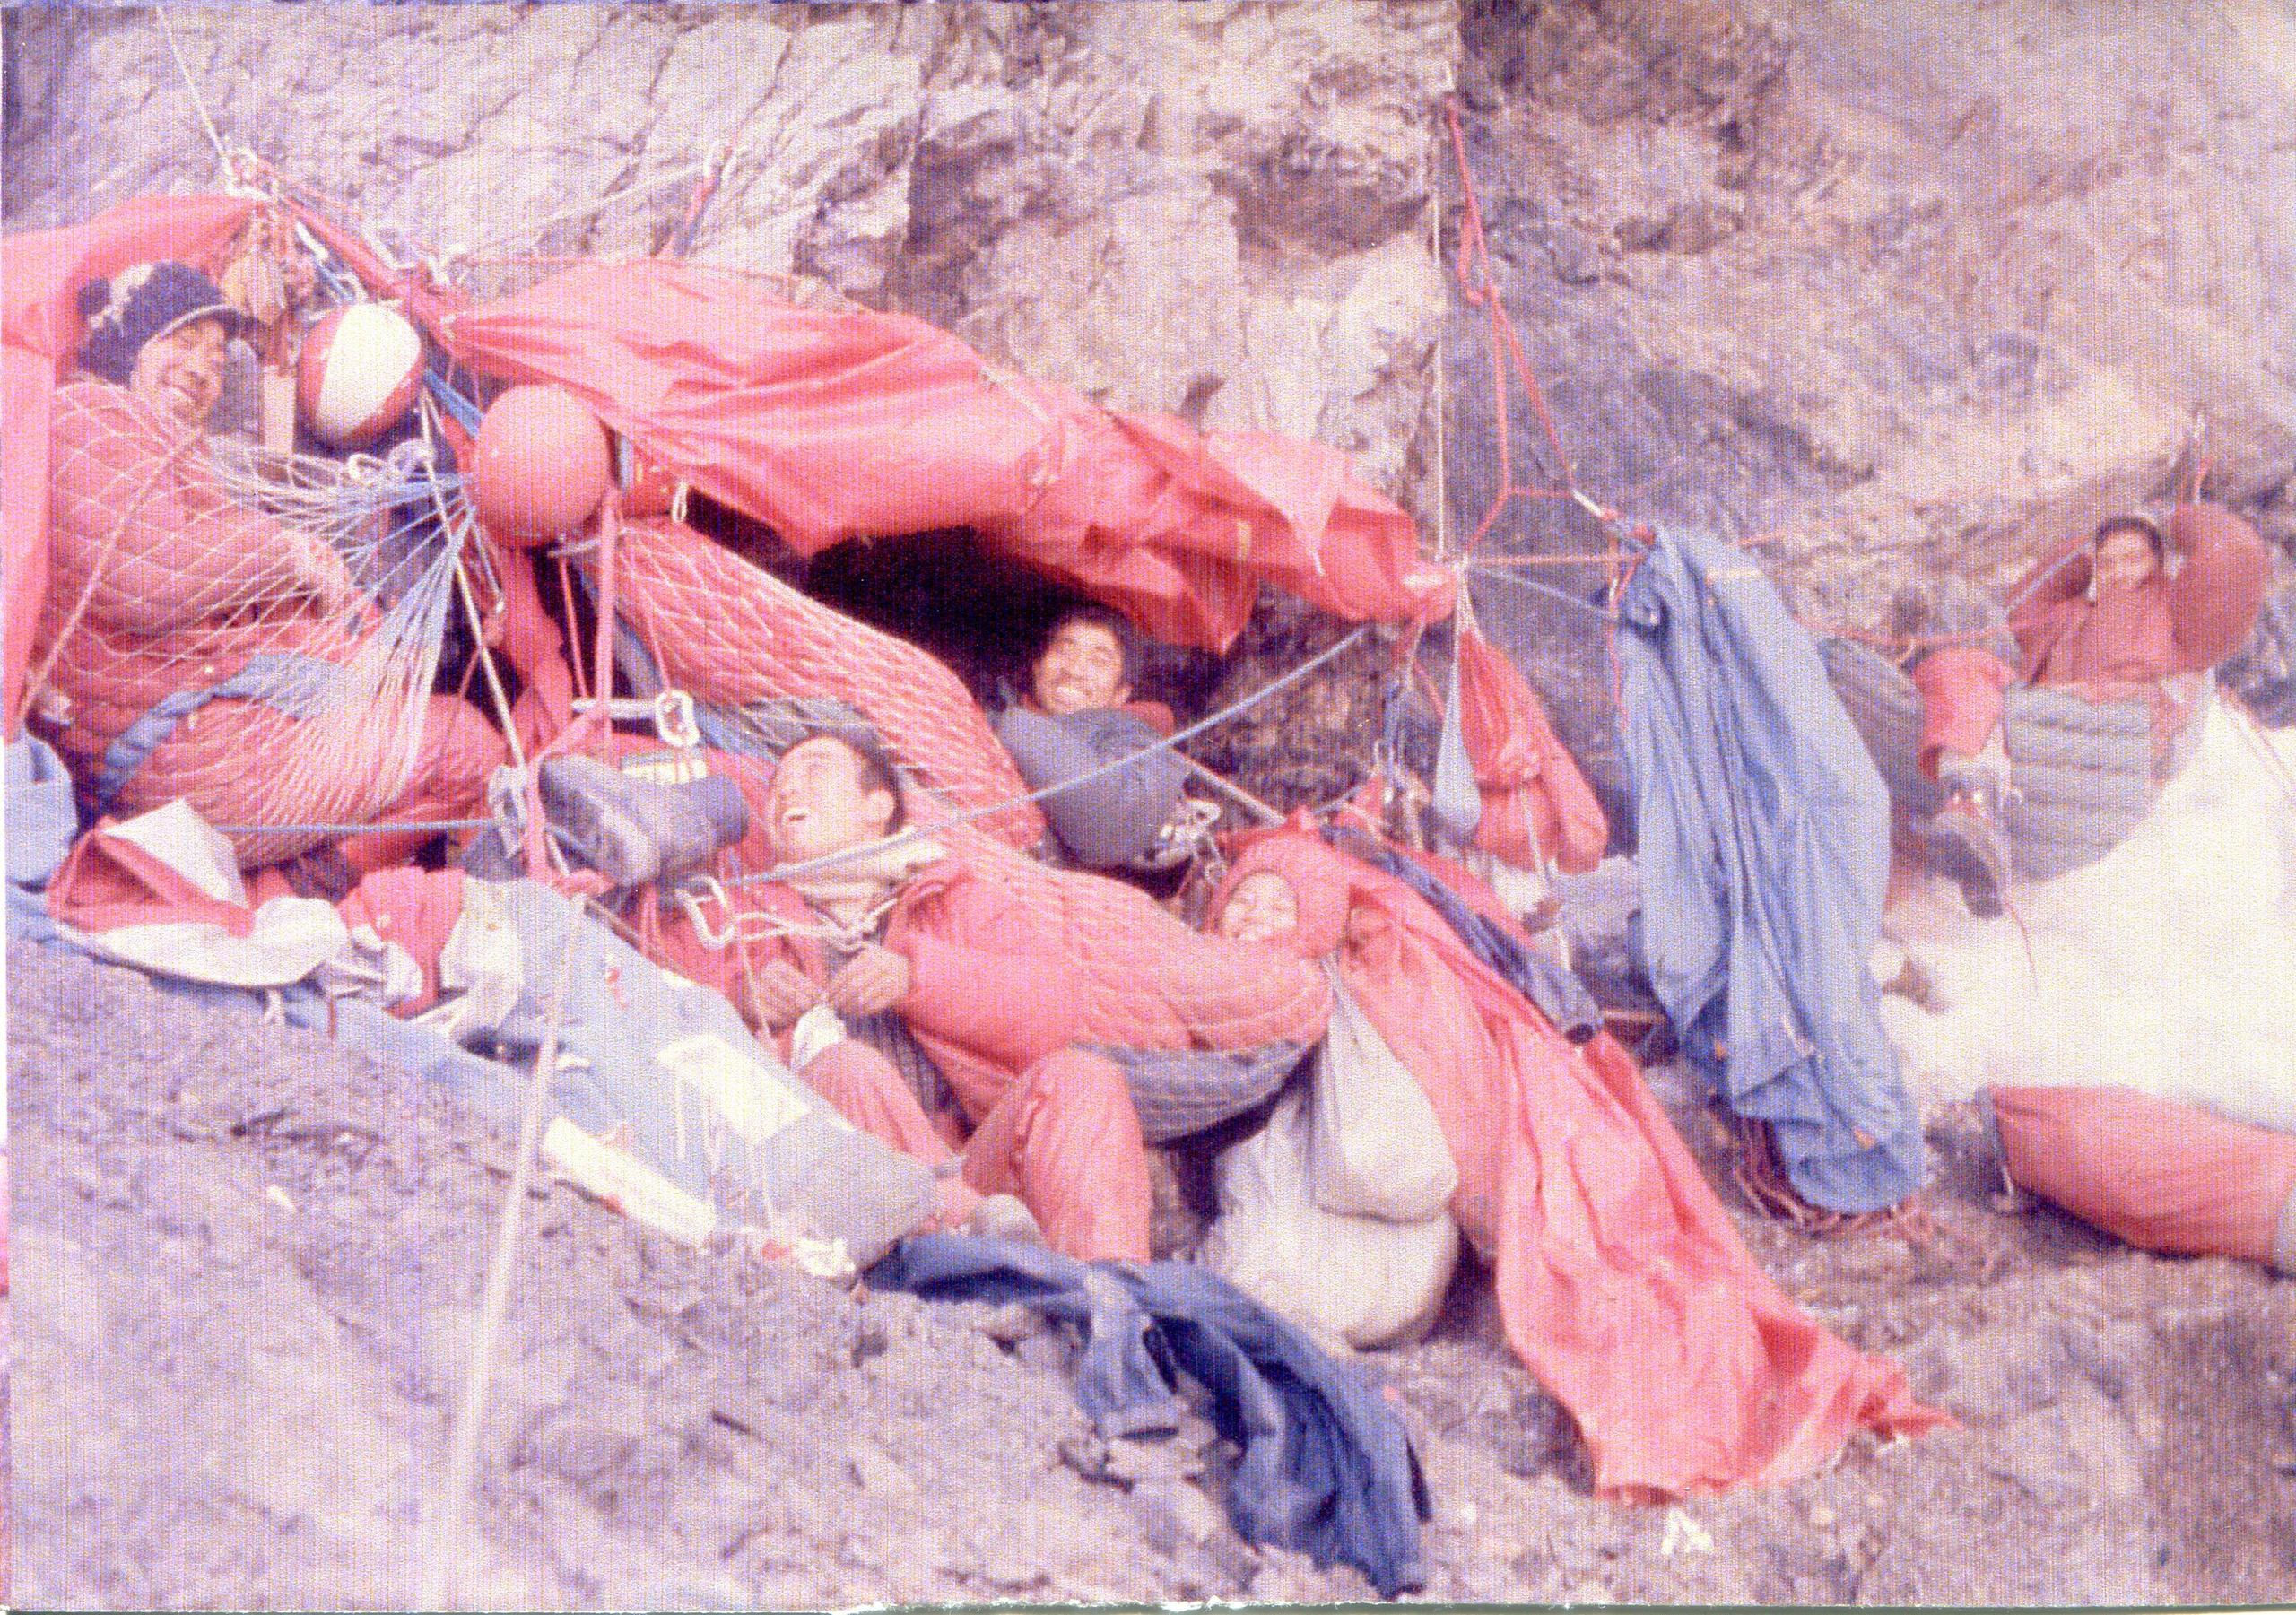 Climbers in sleeping bags on rockface